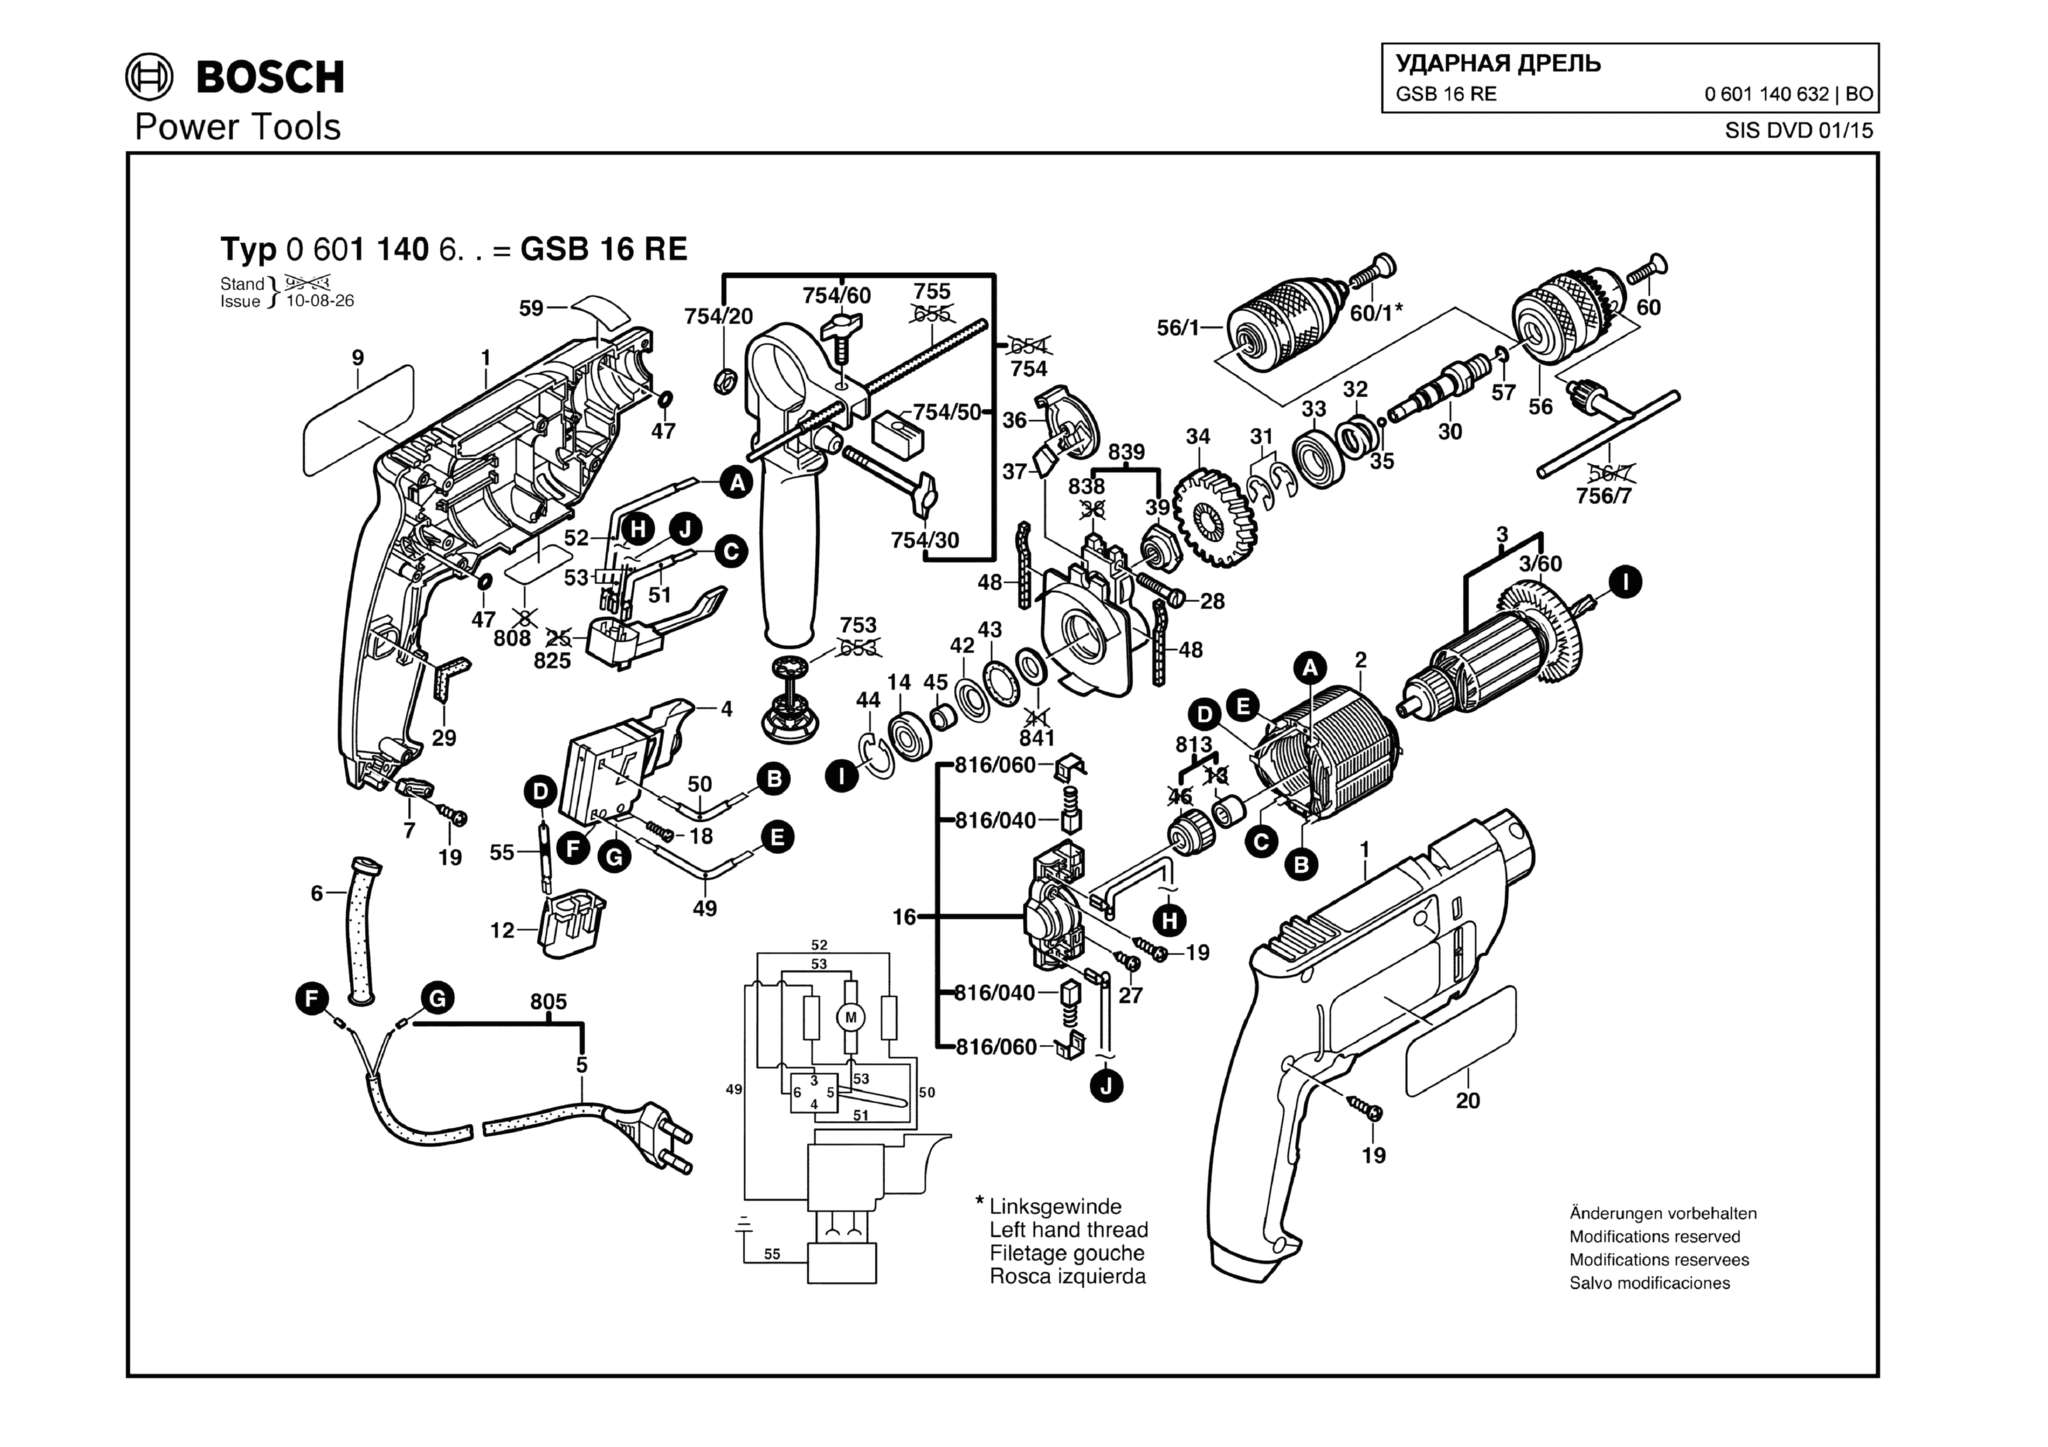 Запчасти, схема и деталировка Bosch GSB 16 RE (ТИП 0601140632)